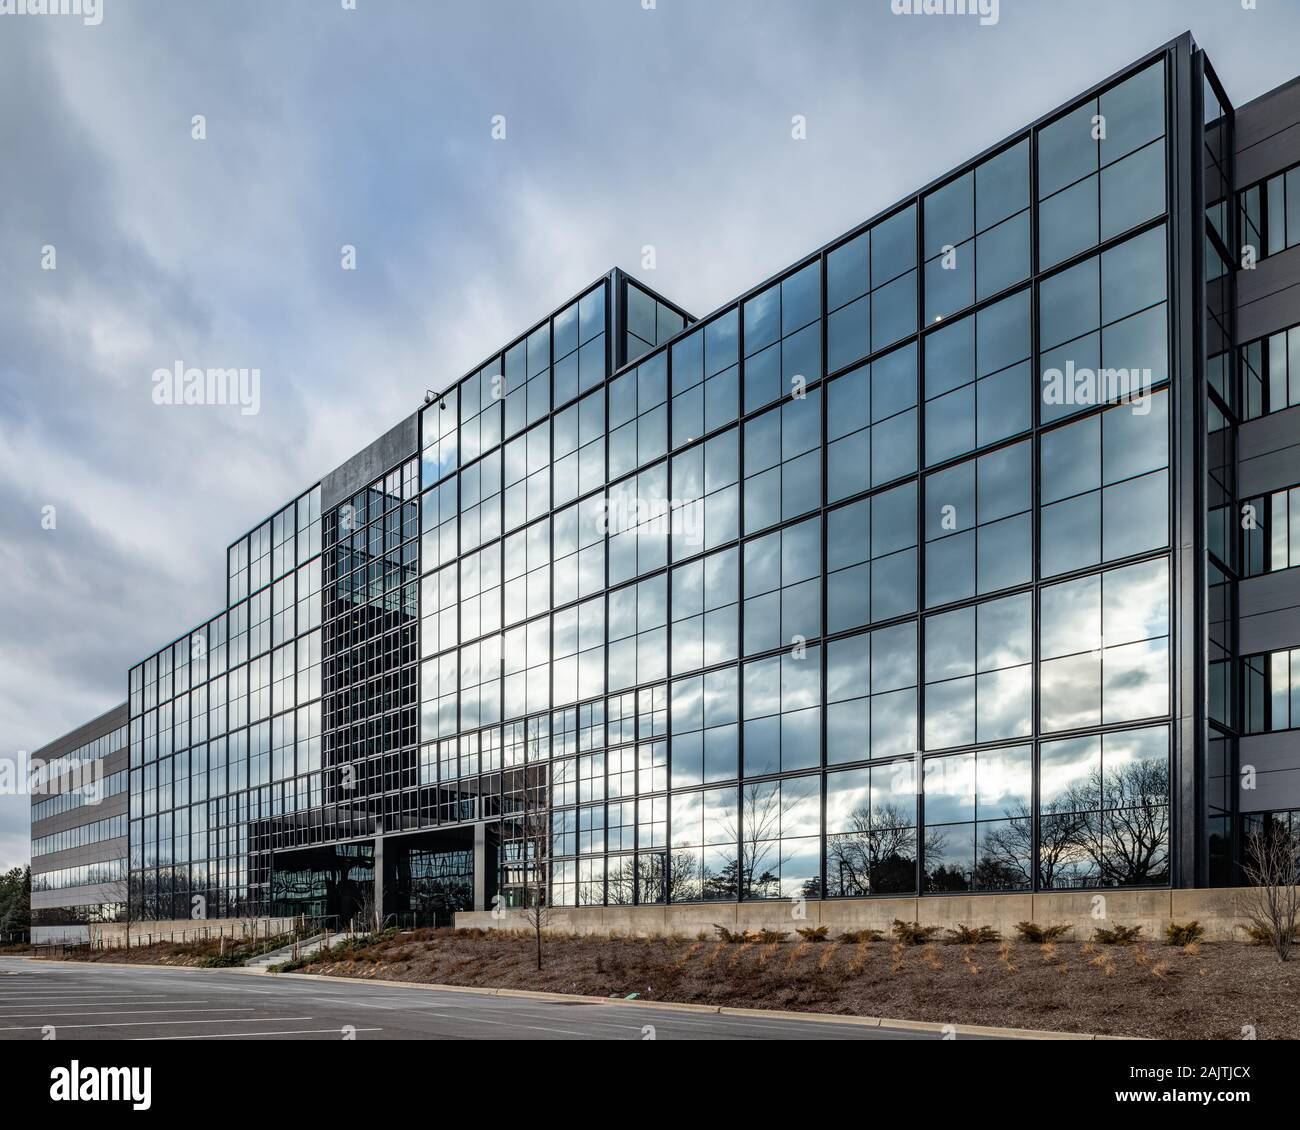 Former Xerox headquarters, suburban office building Stock Photo